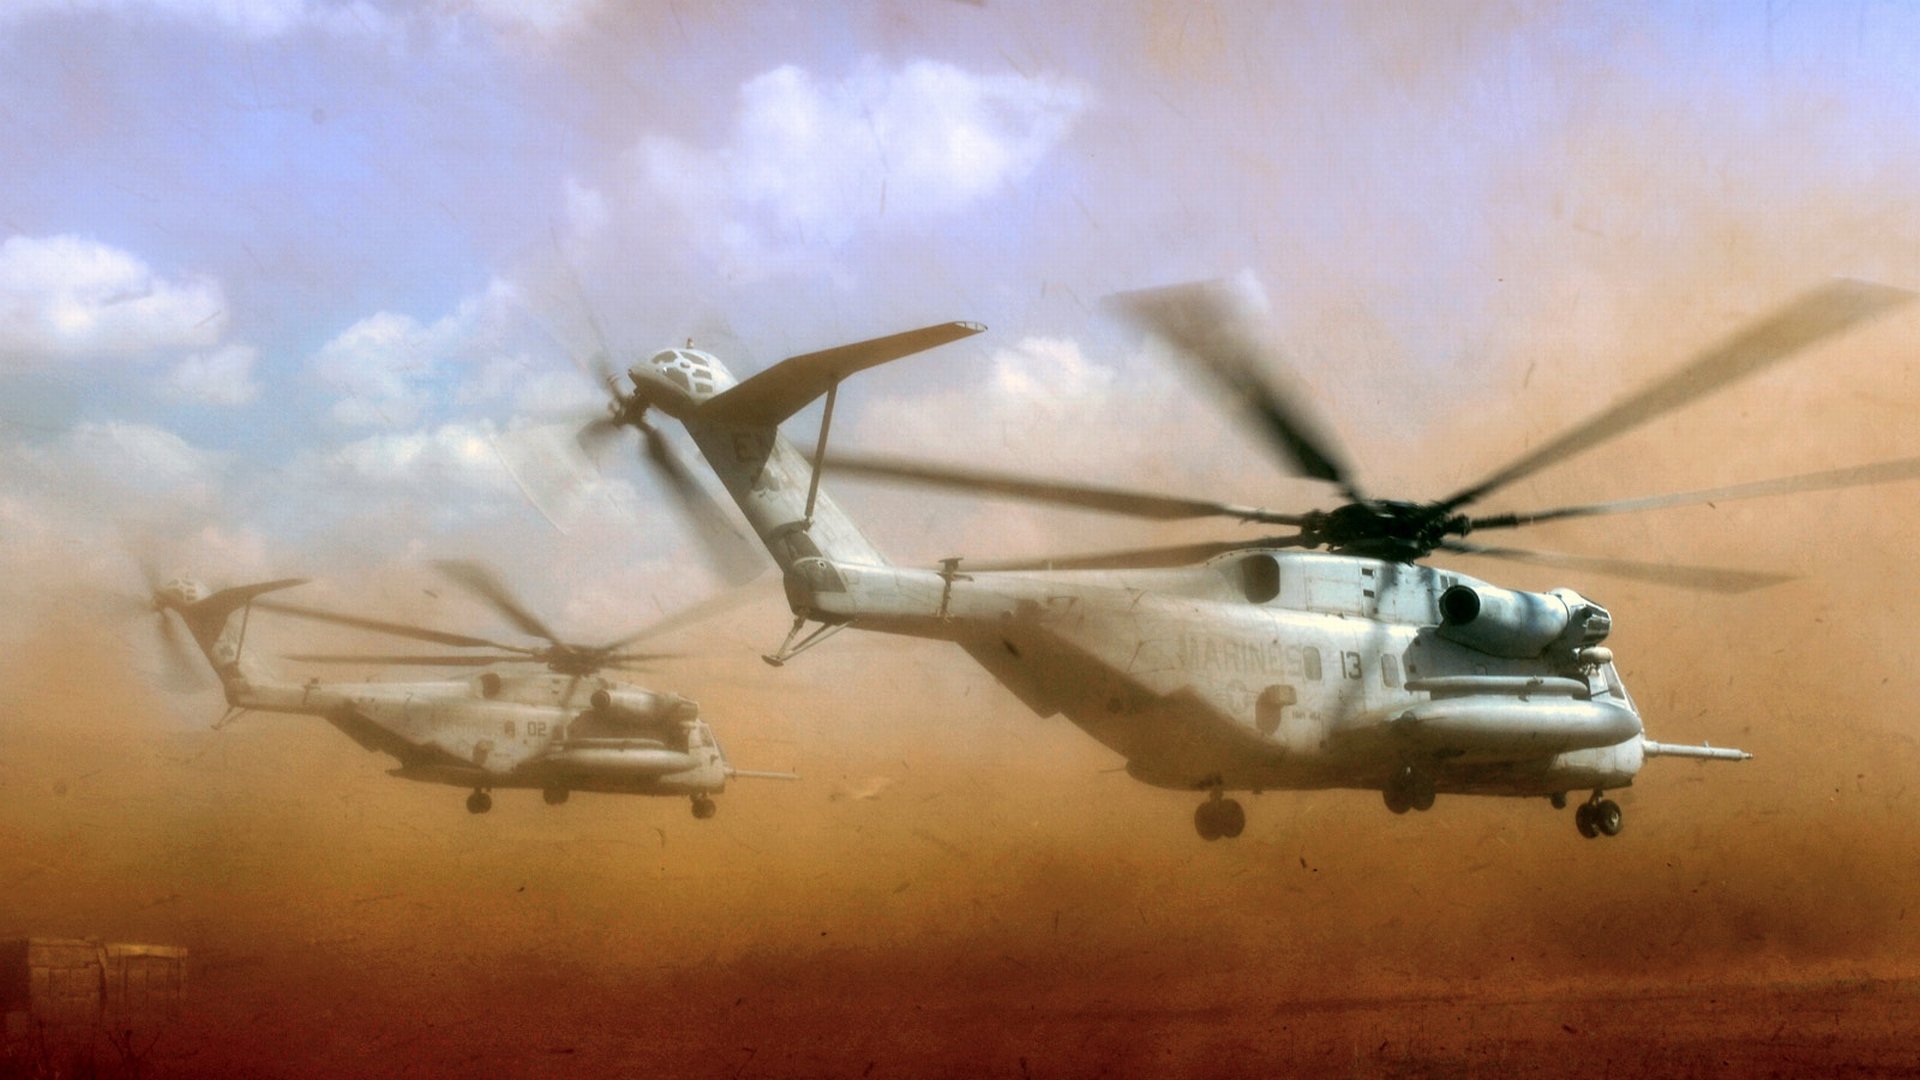 Best Sikorsky CH-53E Super Stallion wallpaper ID:397736 for High Resolution hd 1920x1080 computer